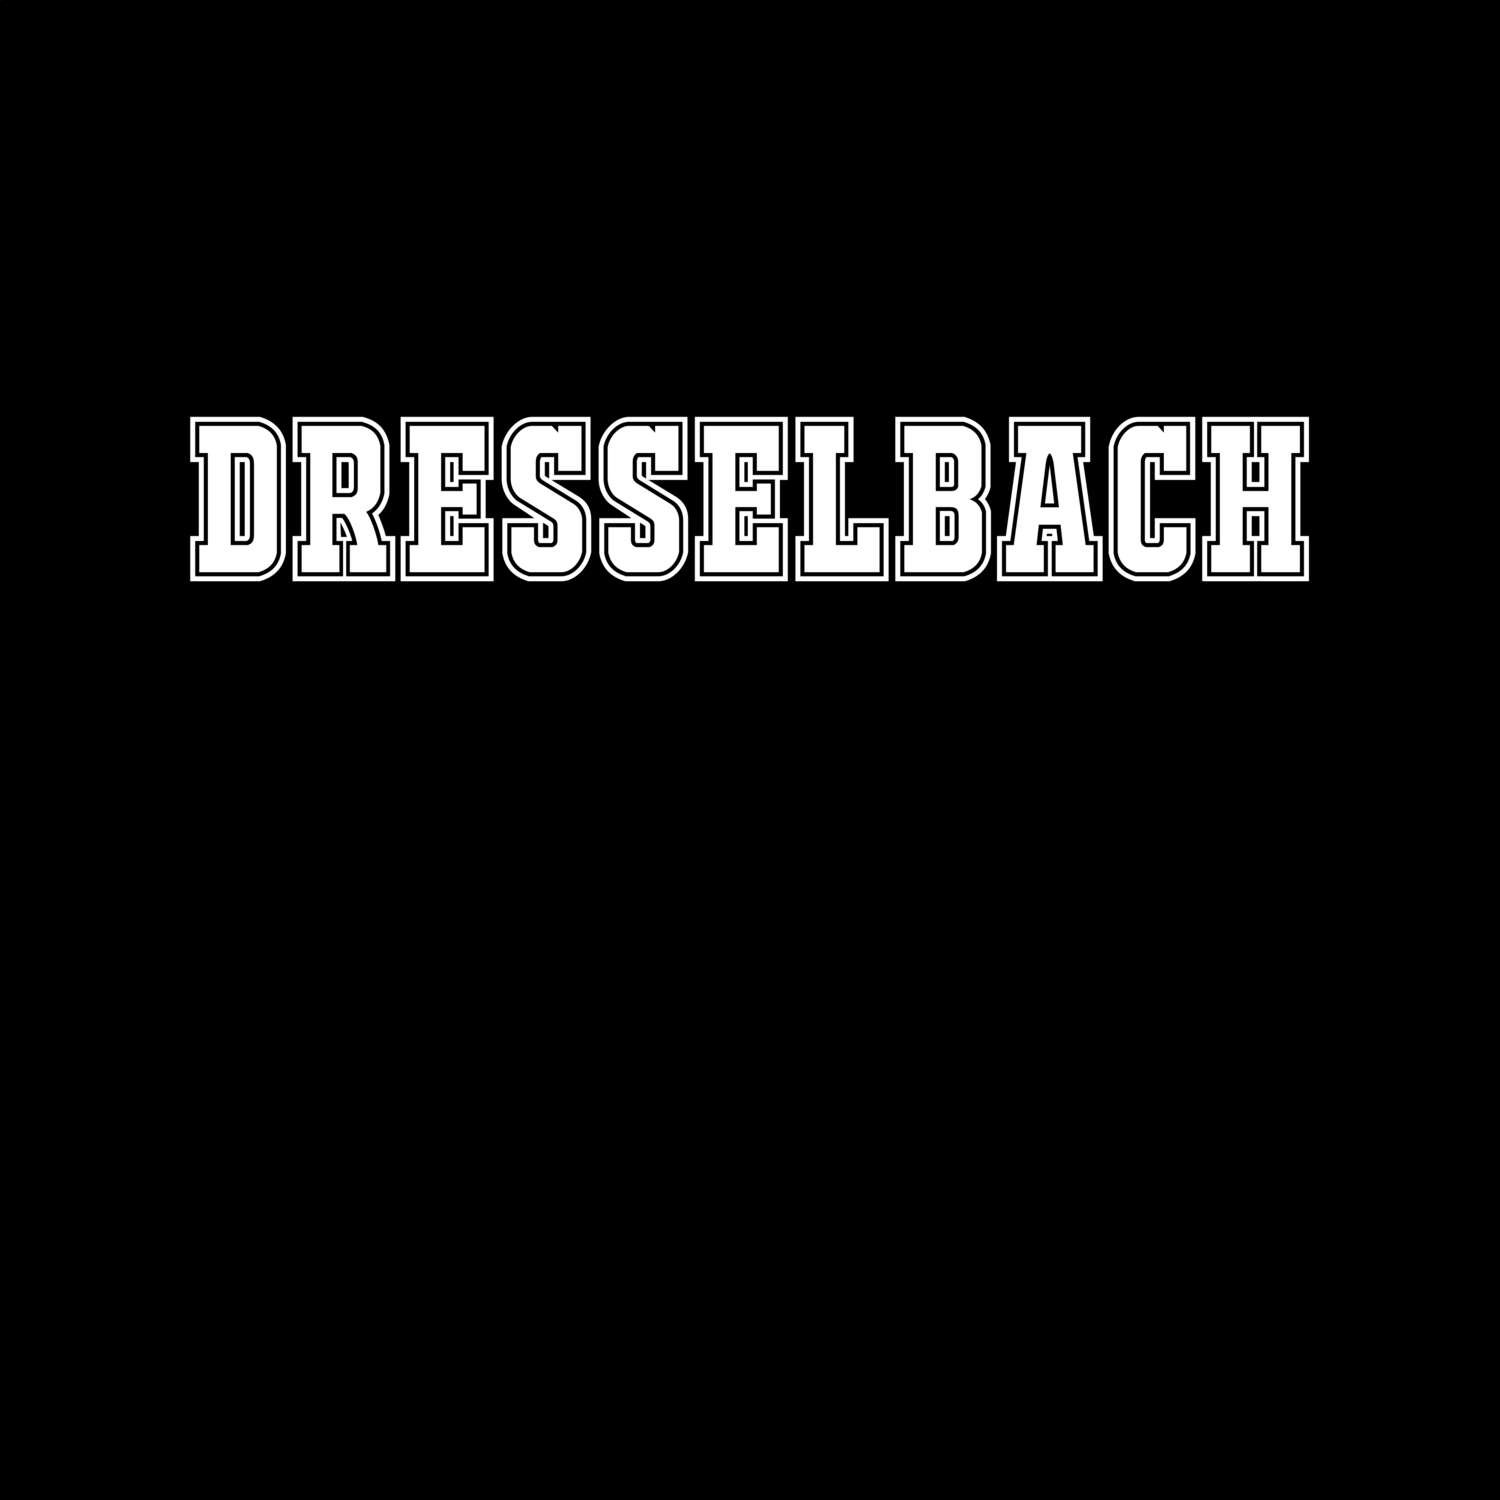 Dresselbach T-Shirt »Classic«